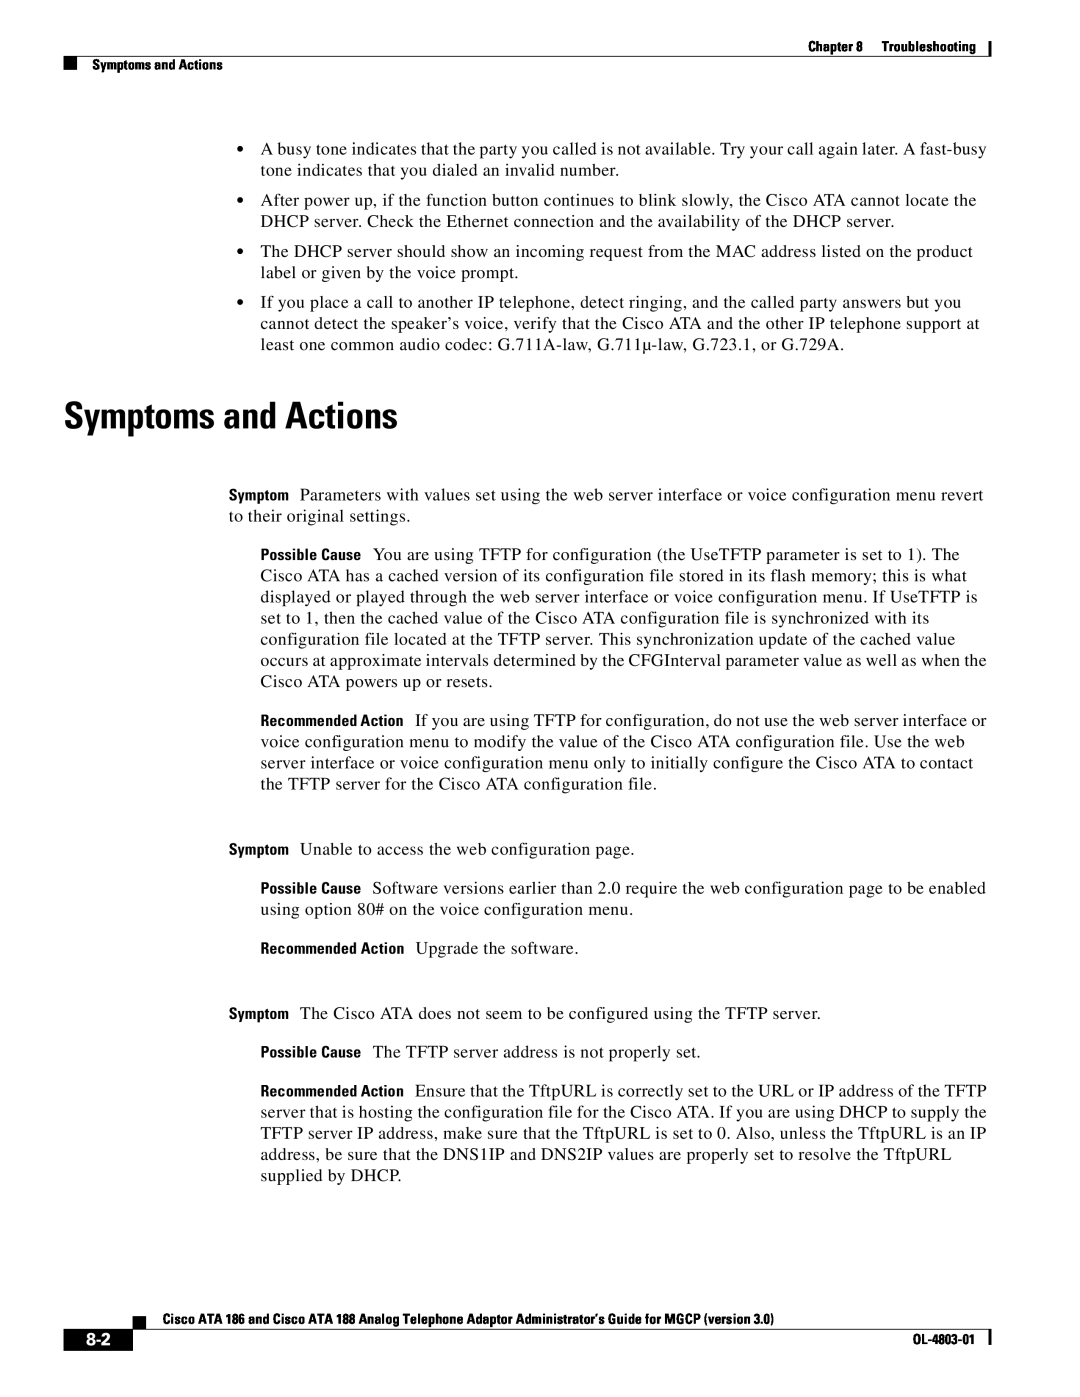 Cisco Systems ATA 186 manual Symptoms and Actions 